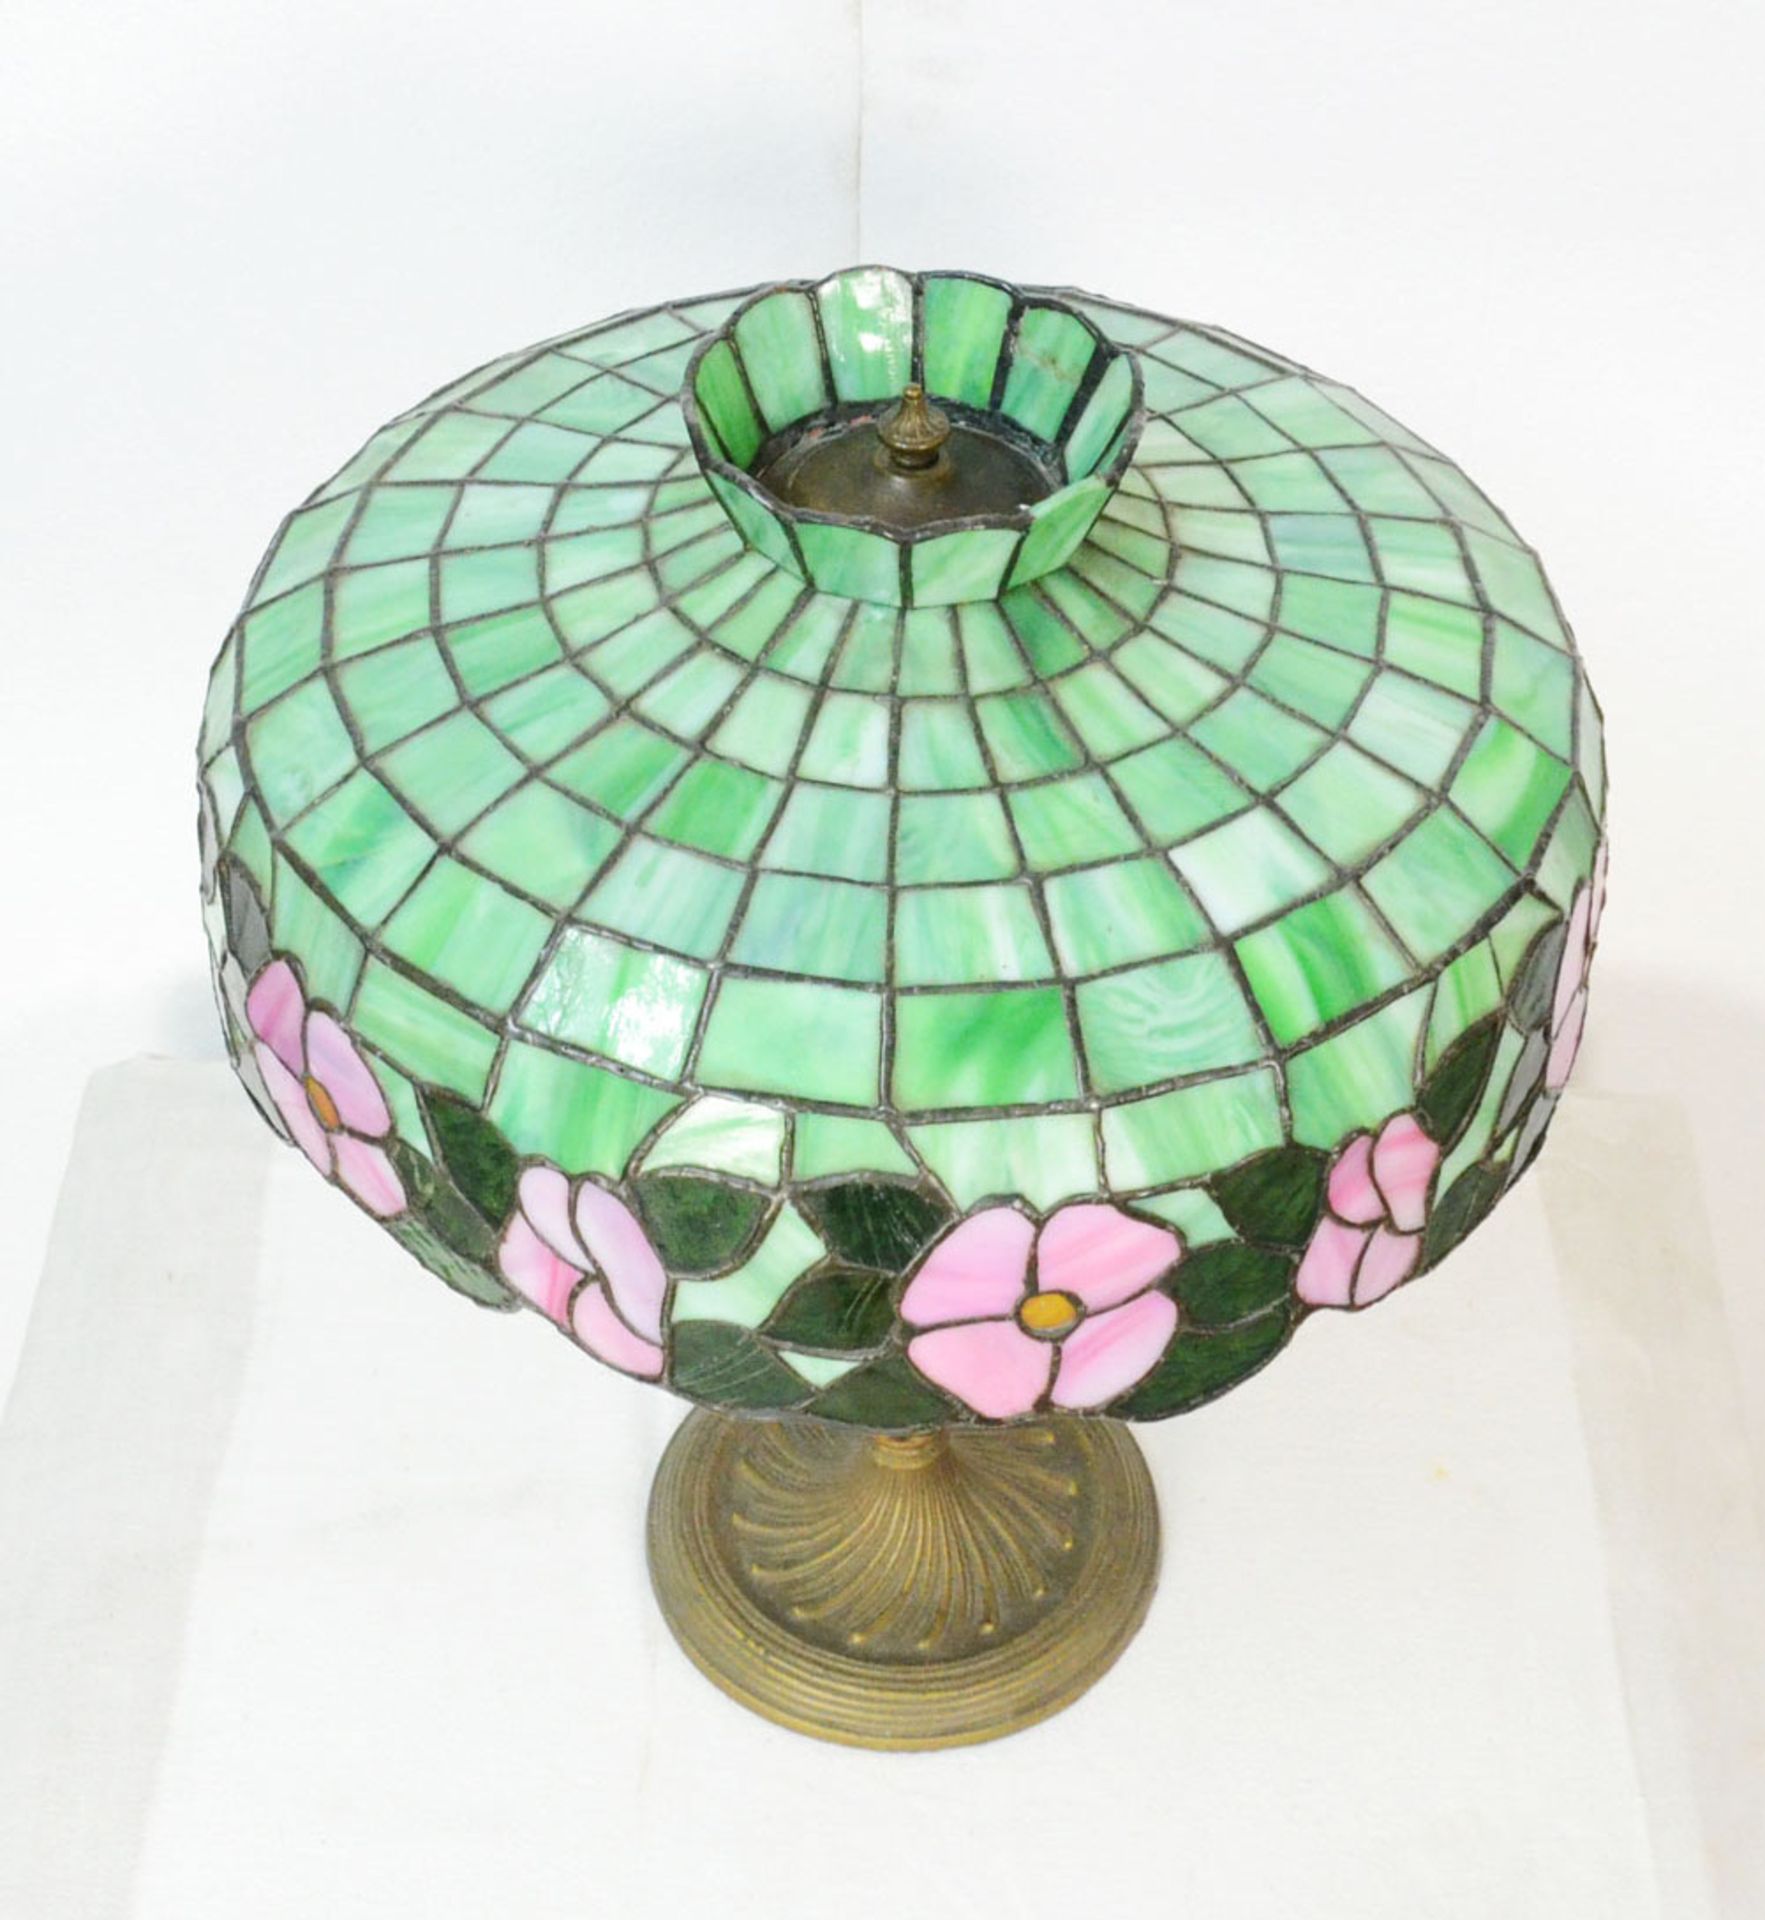 Tiffany style desk lamp - Image 6 of 6